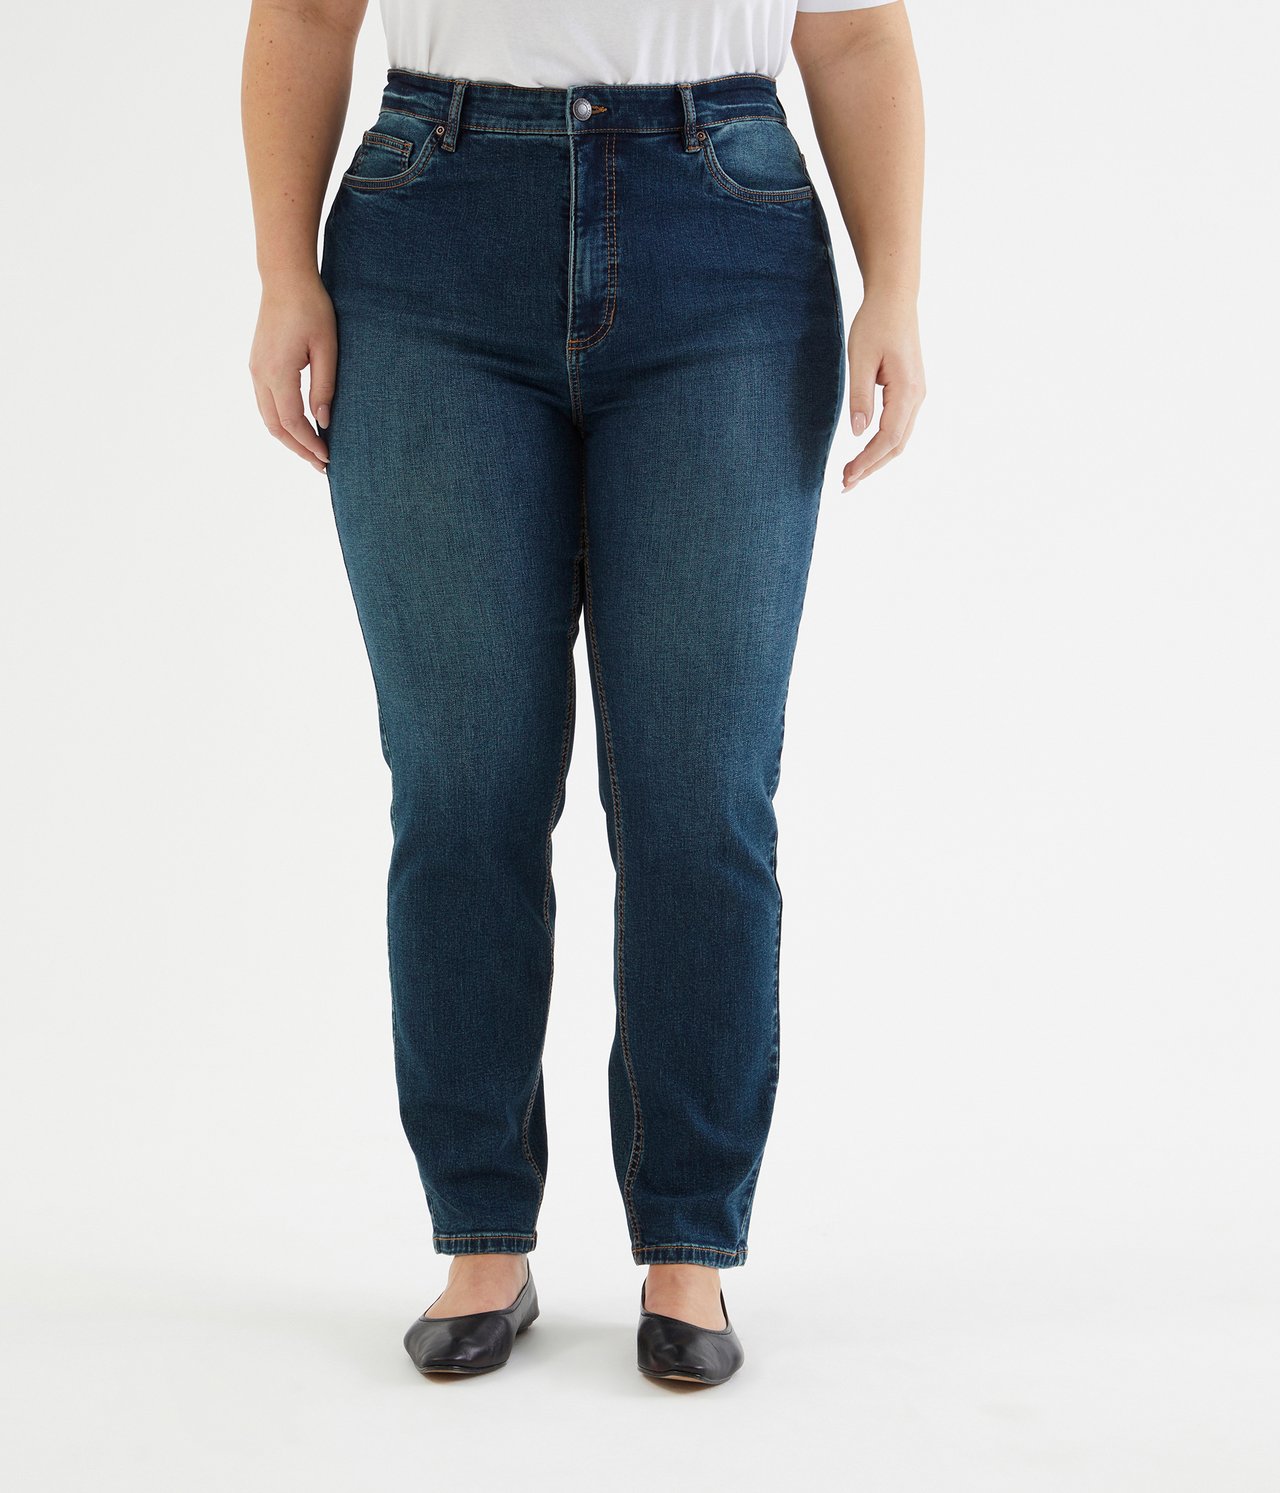 Jenny jeans straight slim fit - Denimi - 2